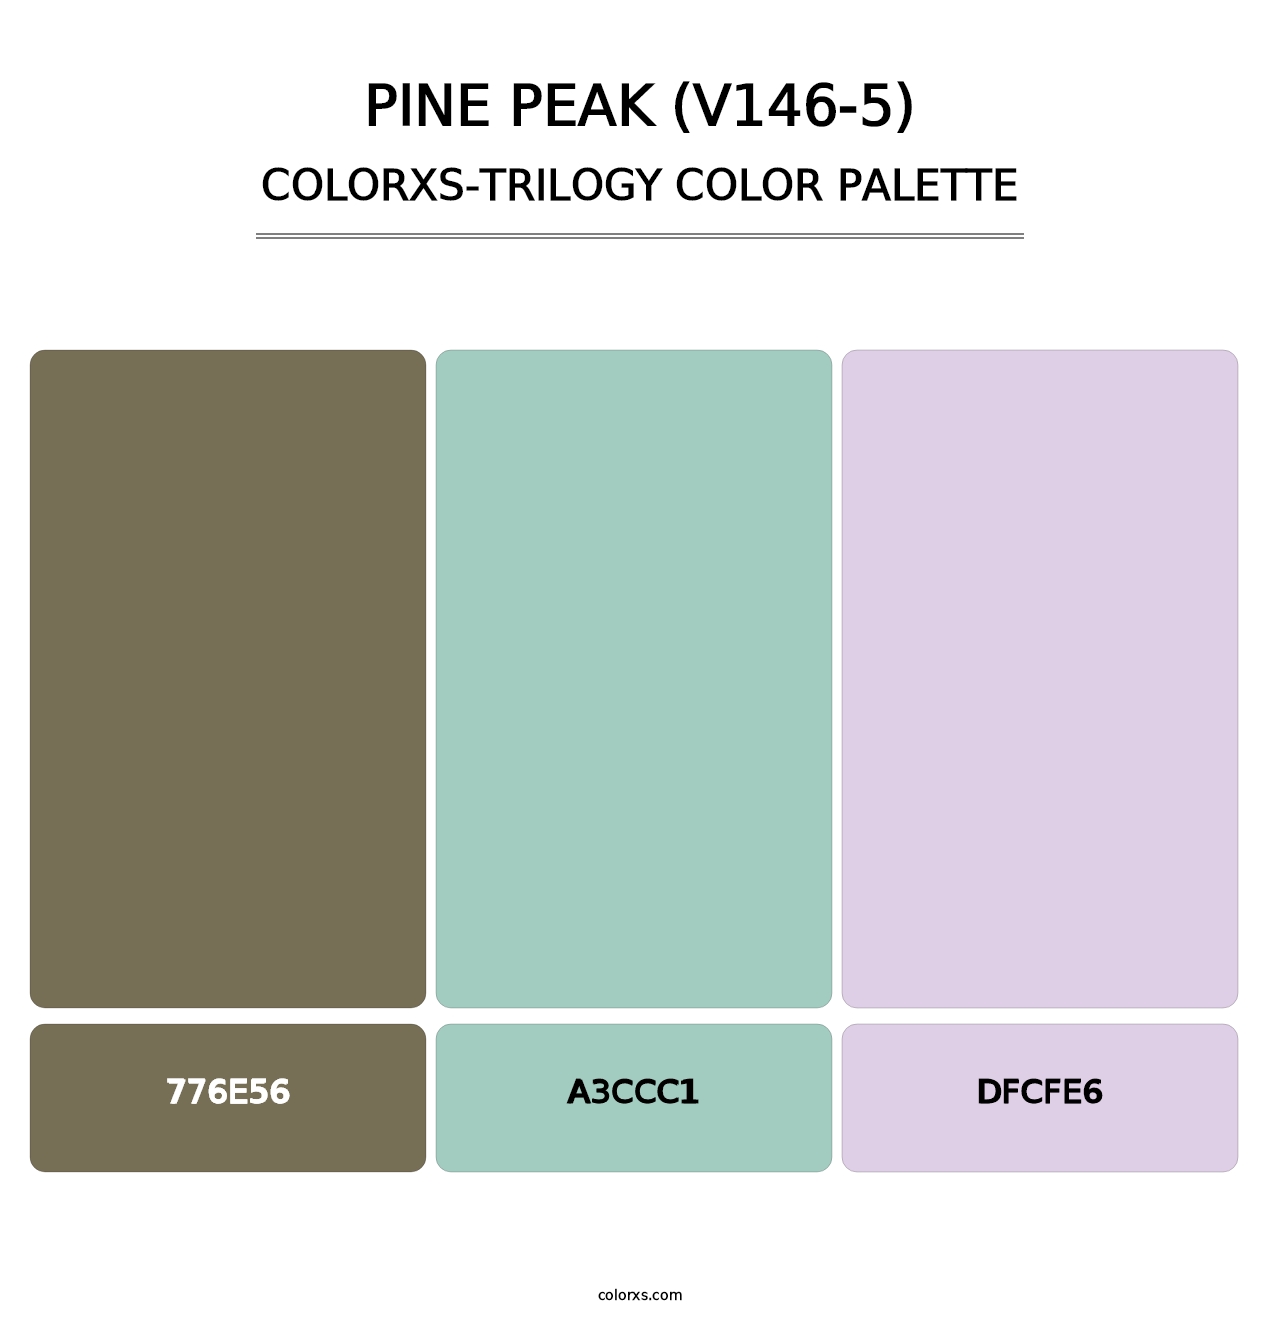 Pine Peak (V146-5) - Colorxs Trilogy Palette